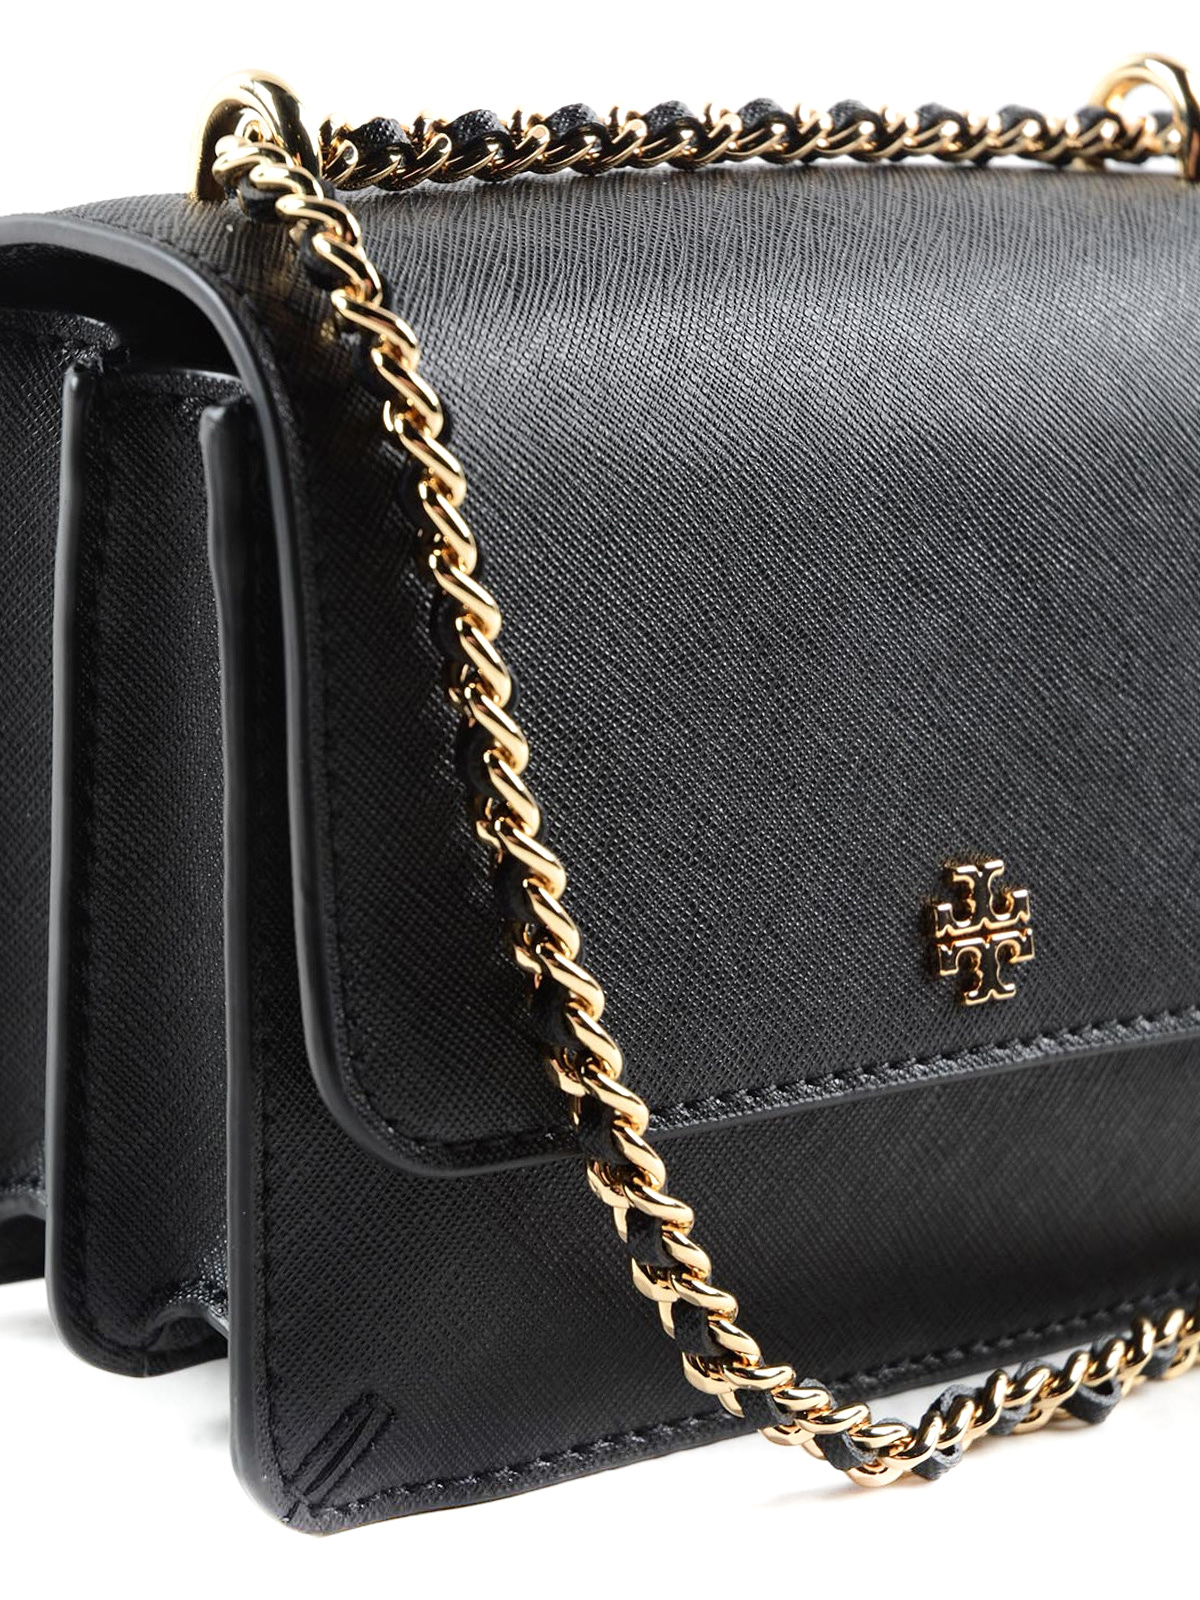 Robinson Round Saffiano Leather Crossbody Bag In Black/gold